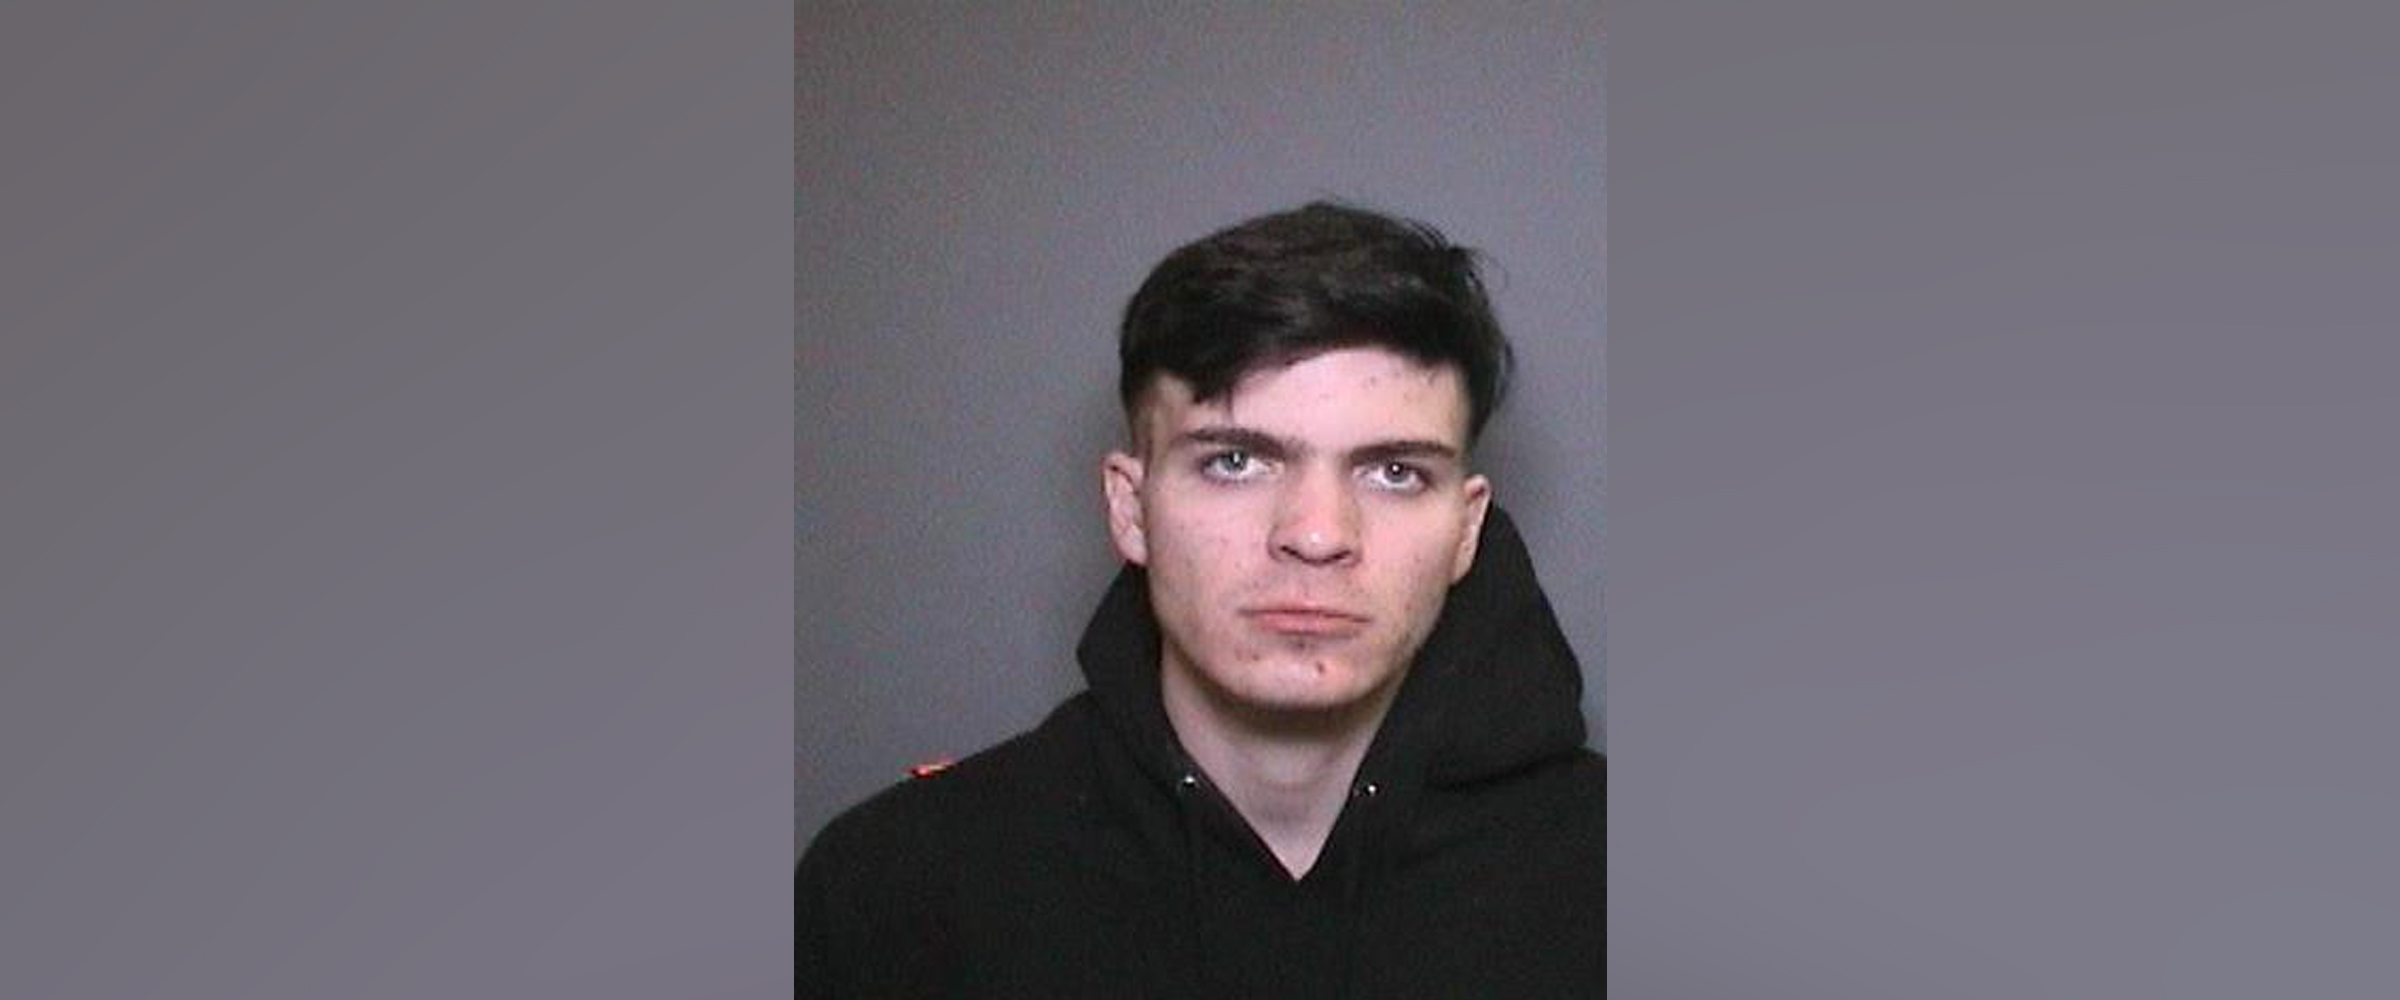 PHOTO: Samuel Woodward, 20, of Newport Beach is suspected of killing 19-year-old Blaze Bernstein.